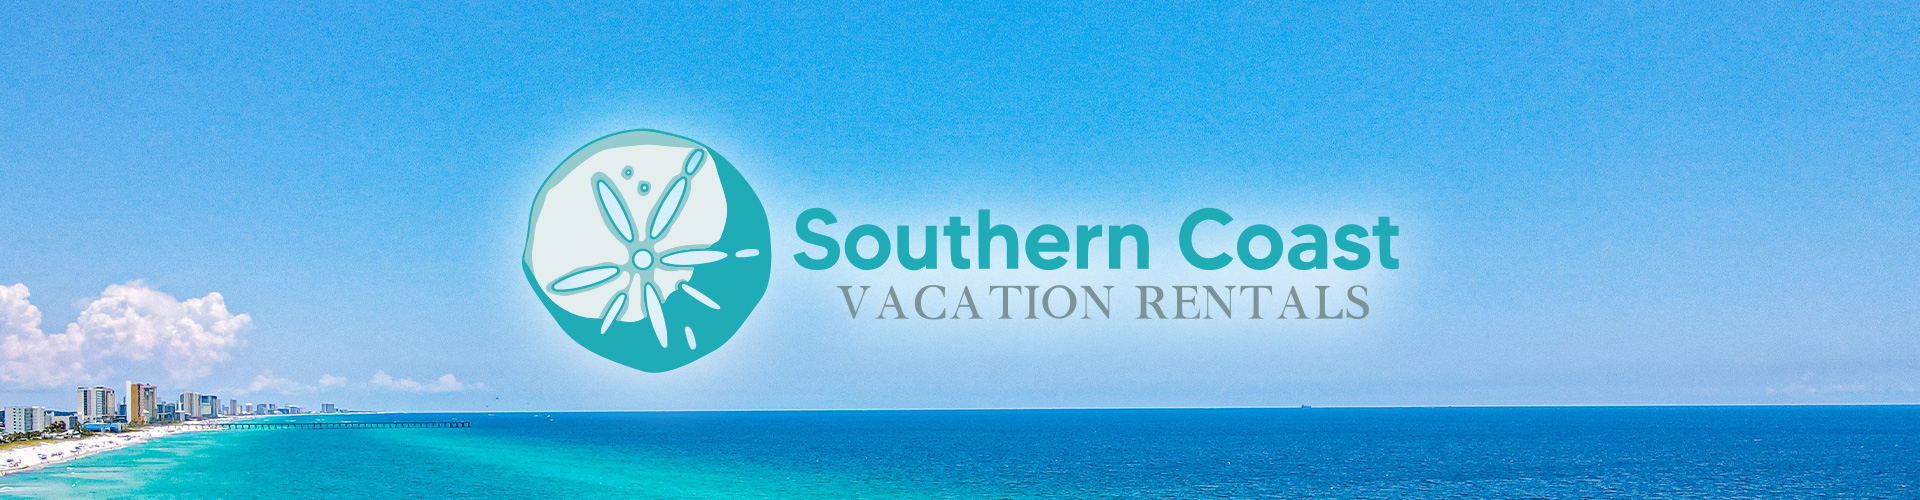 Southern Coast Vacation Rentals Banner